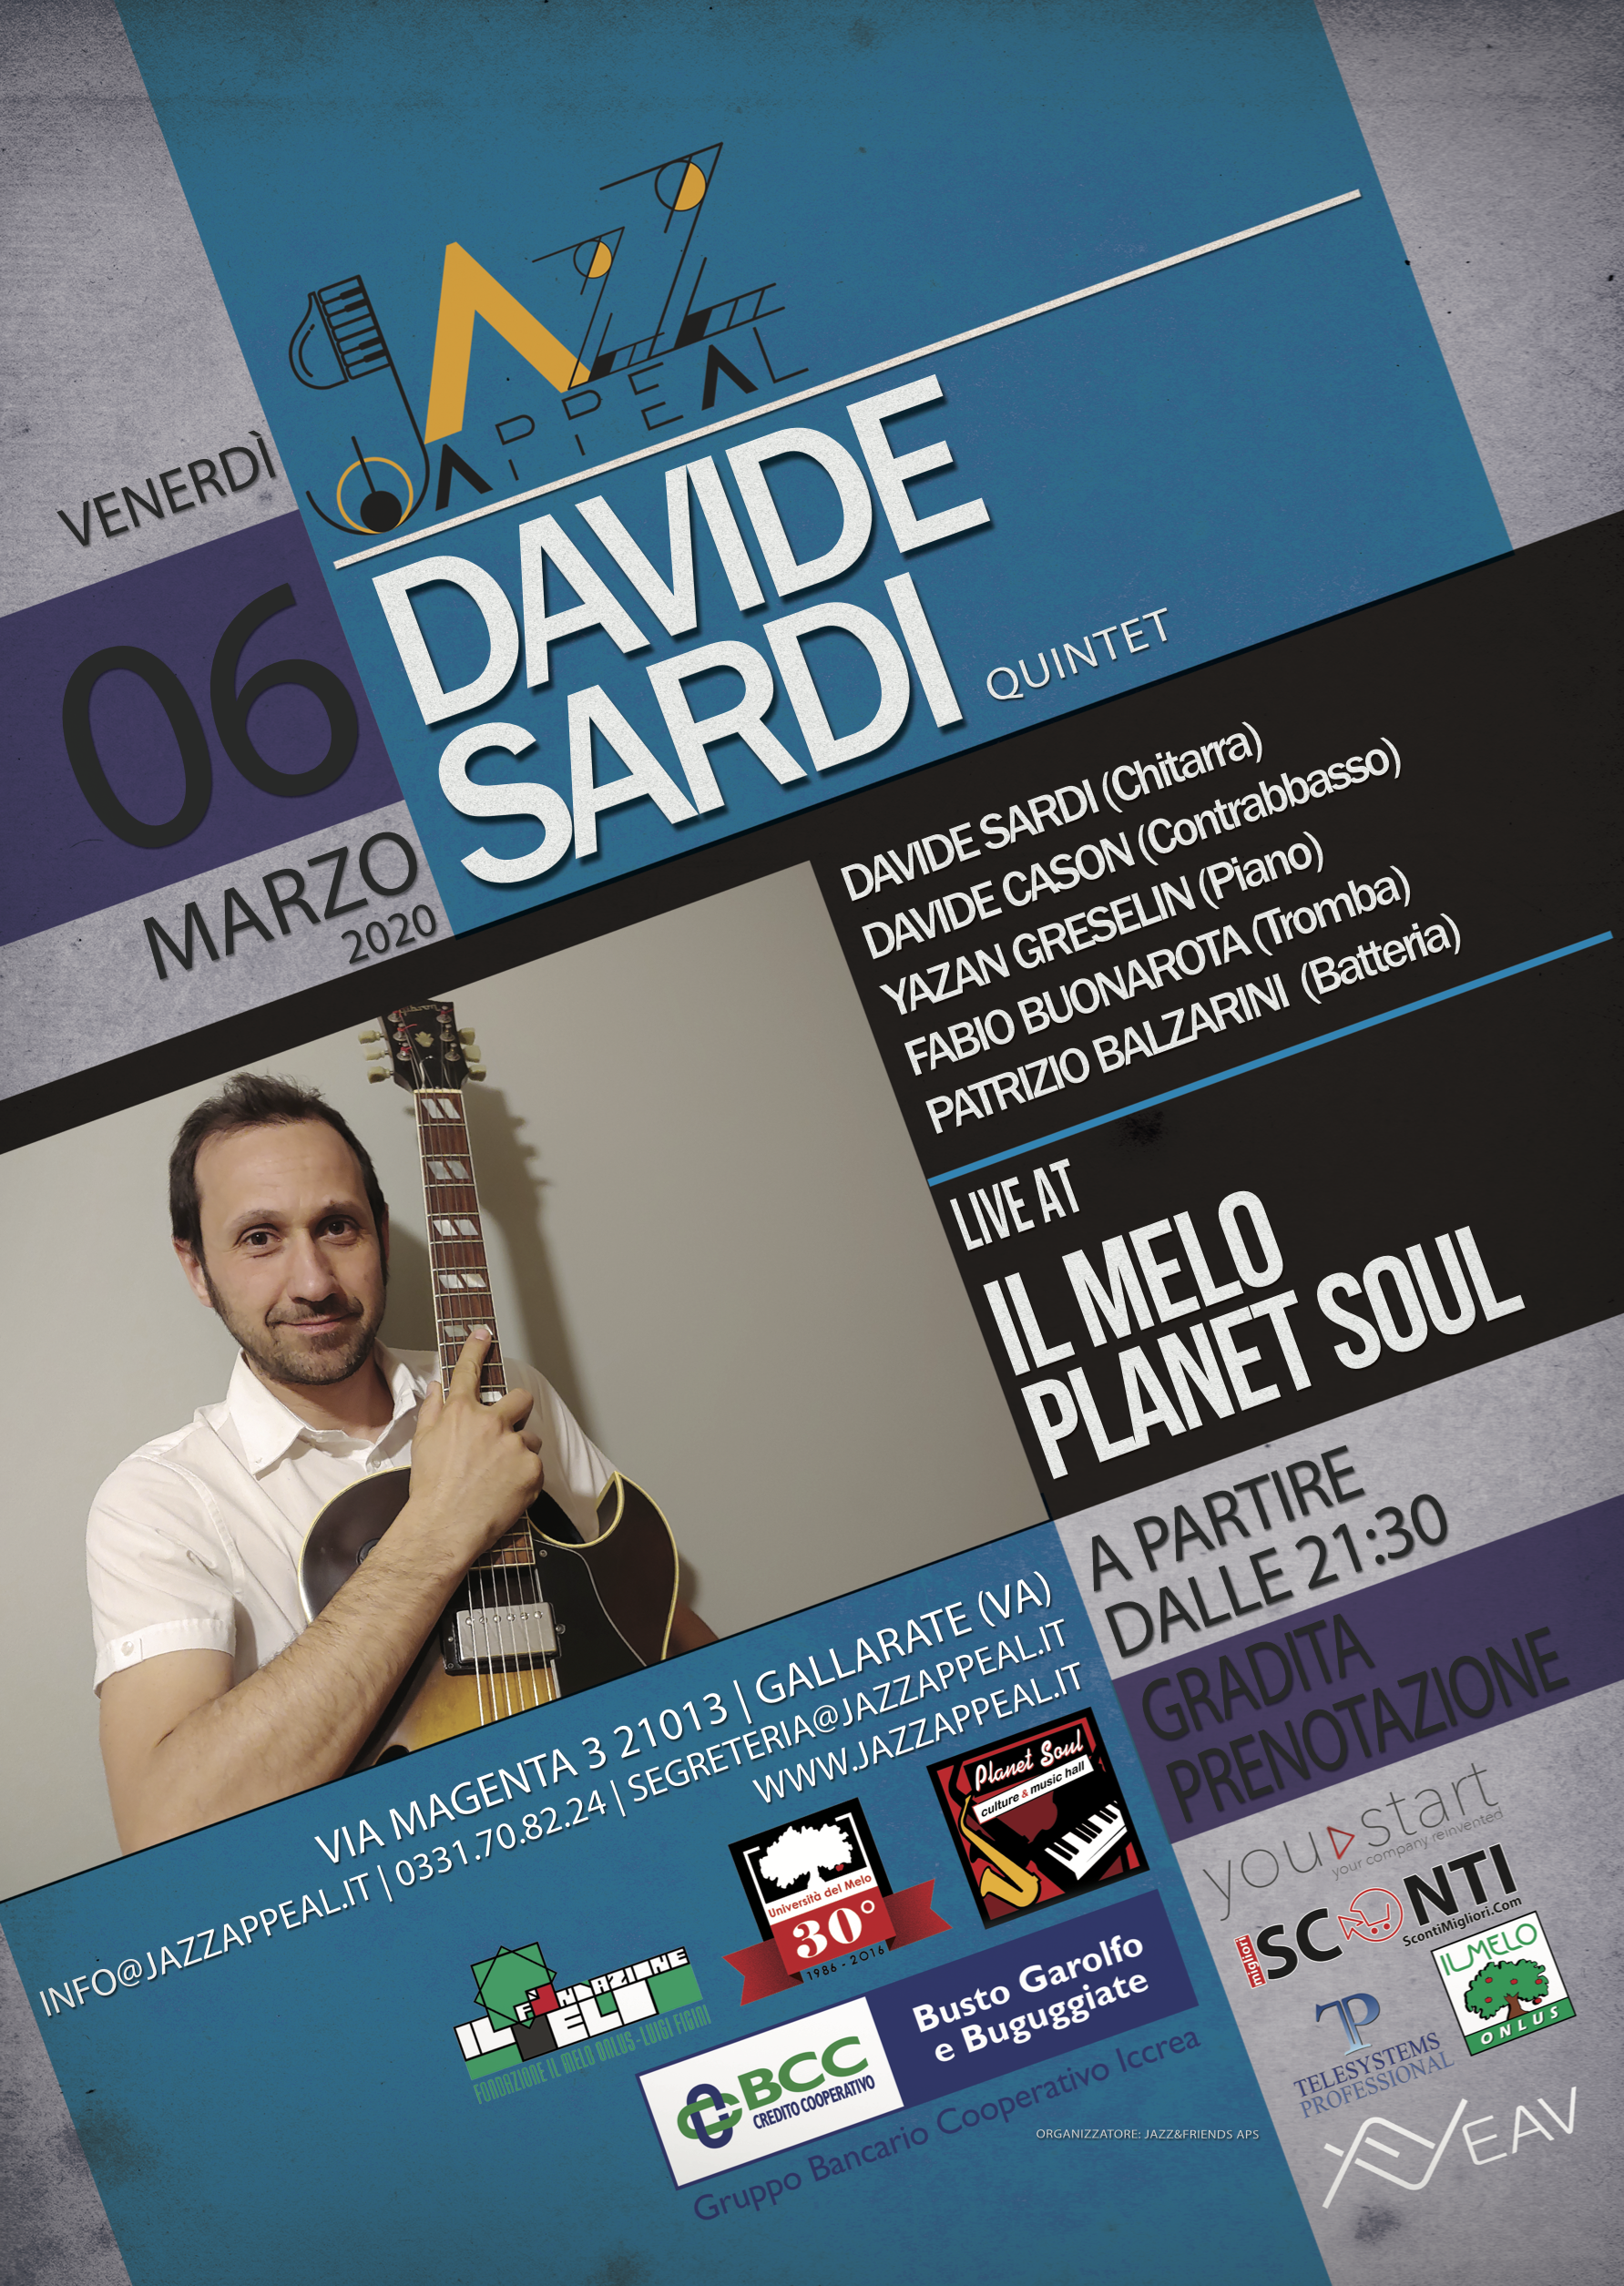 Davide Sardi Quintet Jazz Appeal